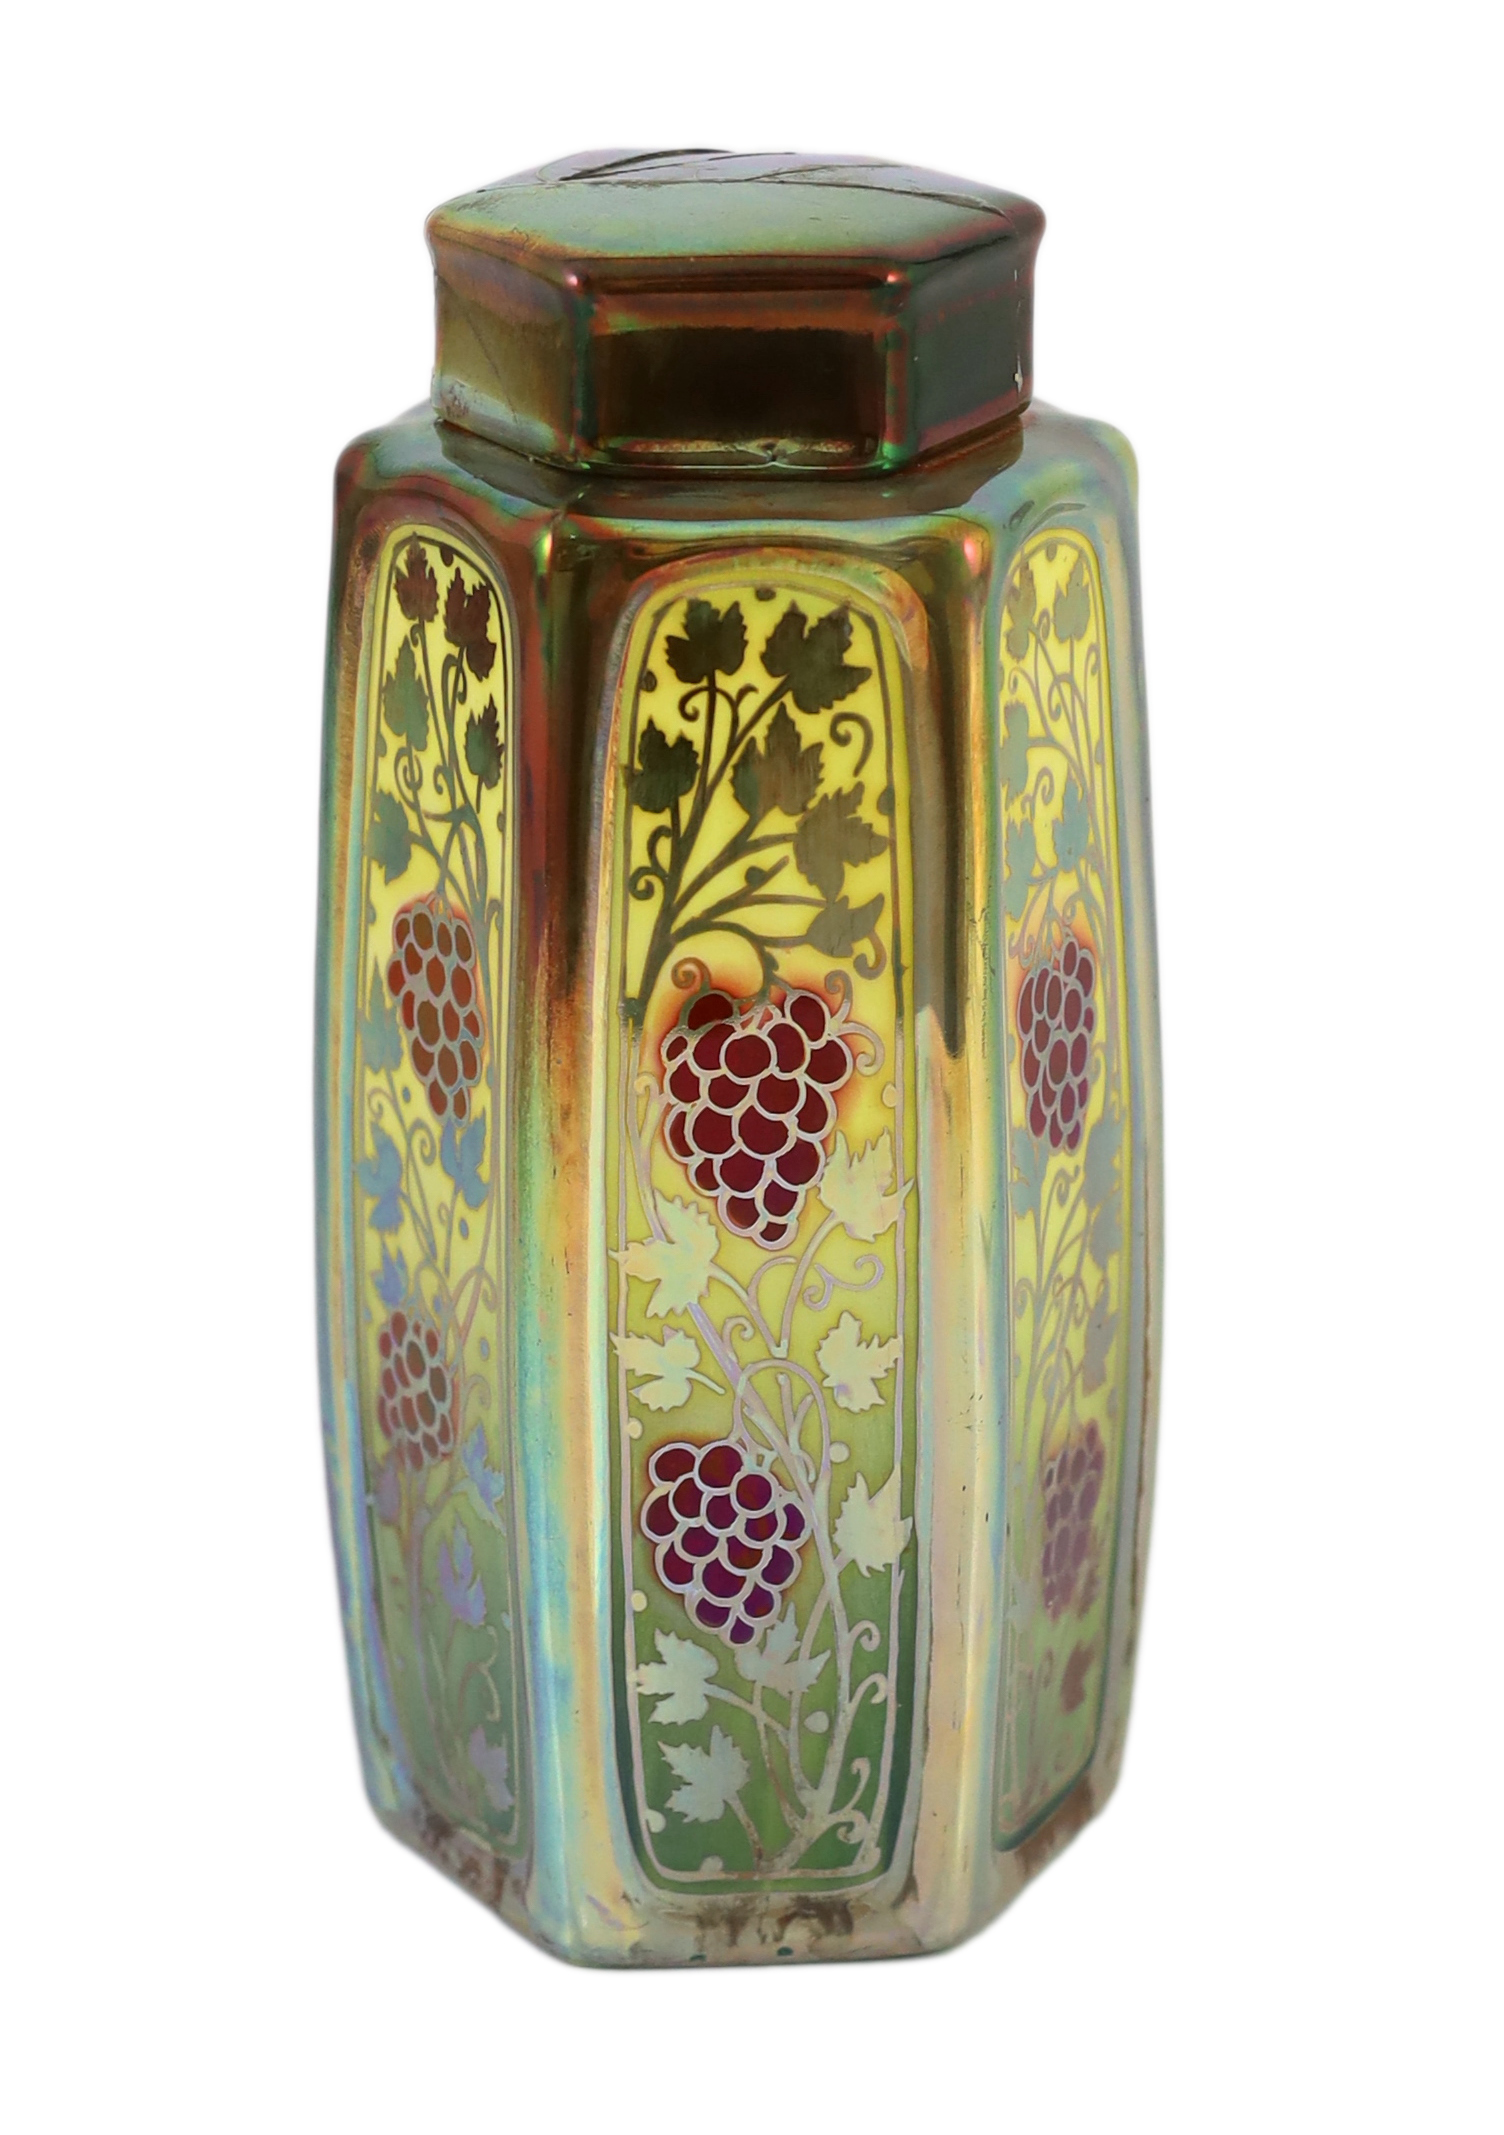 A Pilkingtons Royal Lancastrian lustre hexagonal jar and cover, by William S. Mycock                                                                                                                                        